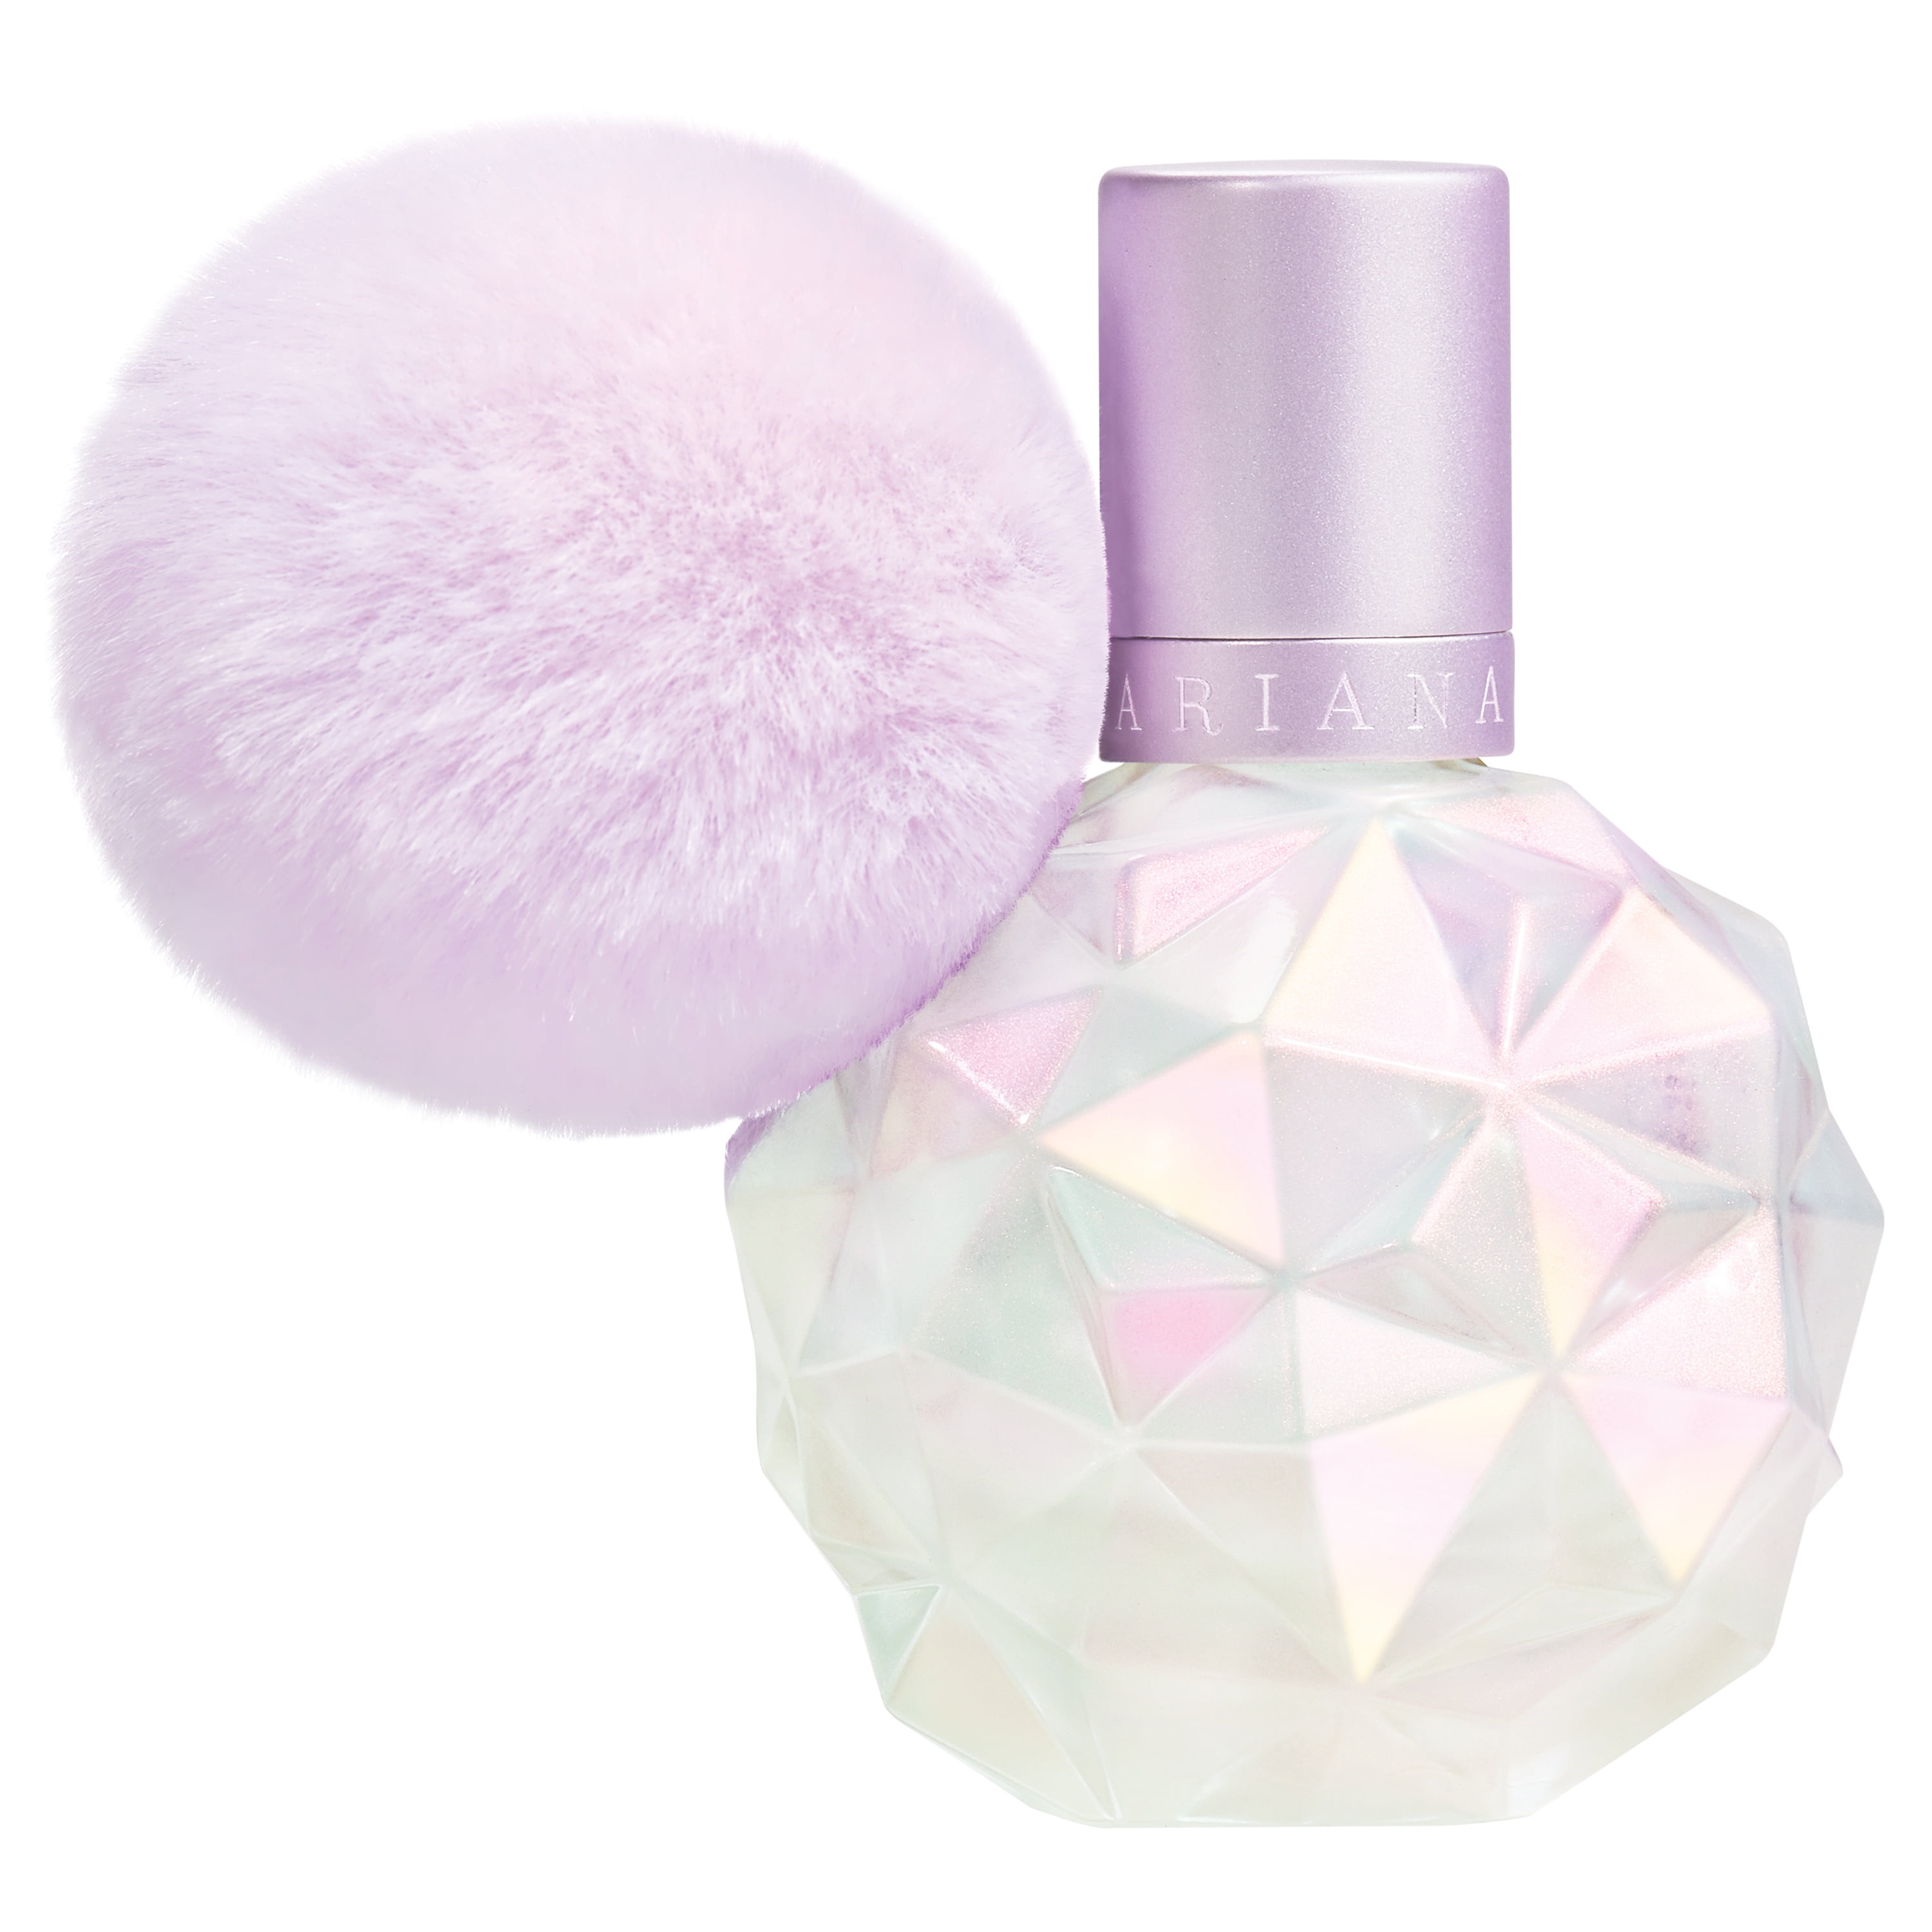 Ariana Grande Moonlight Eau de Parfum, Perfume for Women, 3.4 Fl Oz Full Size